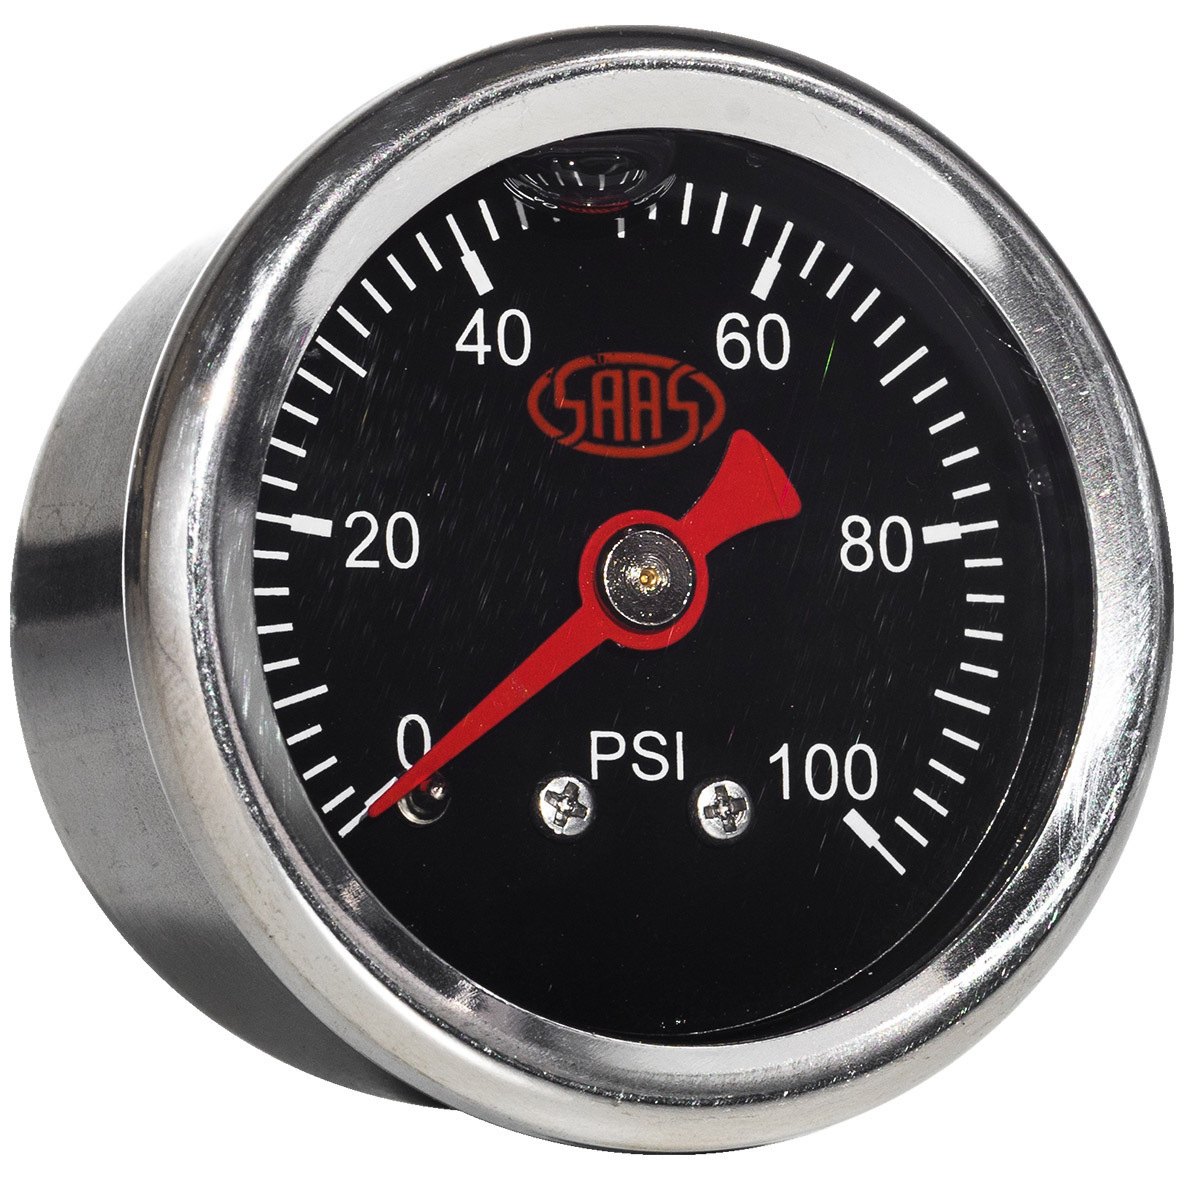 ProSense G25-SL100-4CB Mechanical Pressure Gauge - IMS Supply